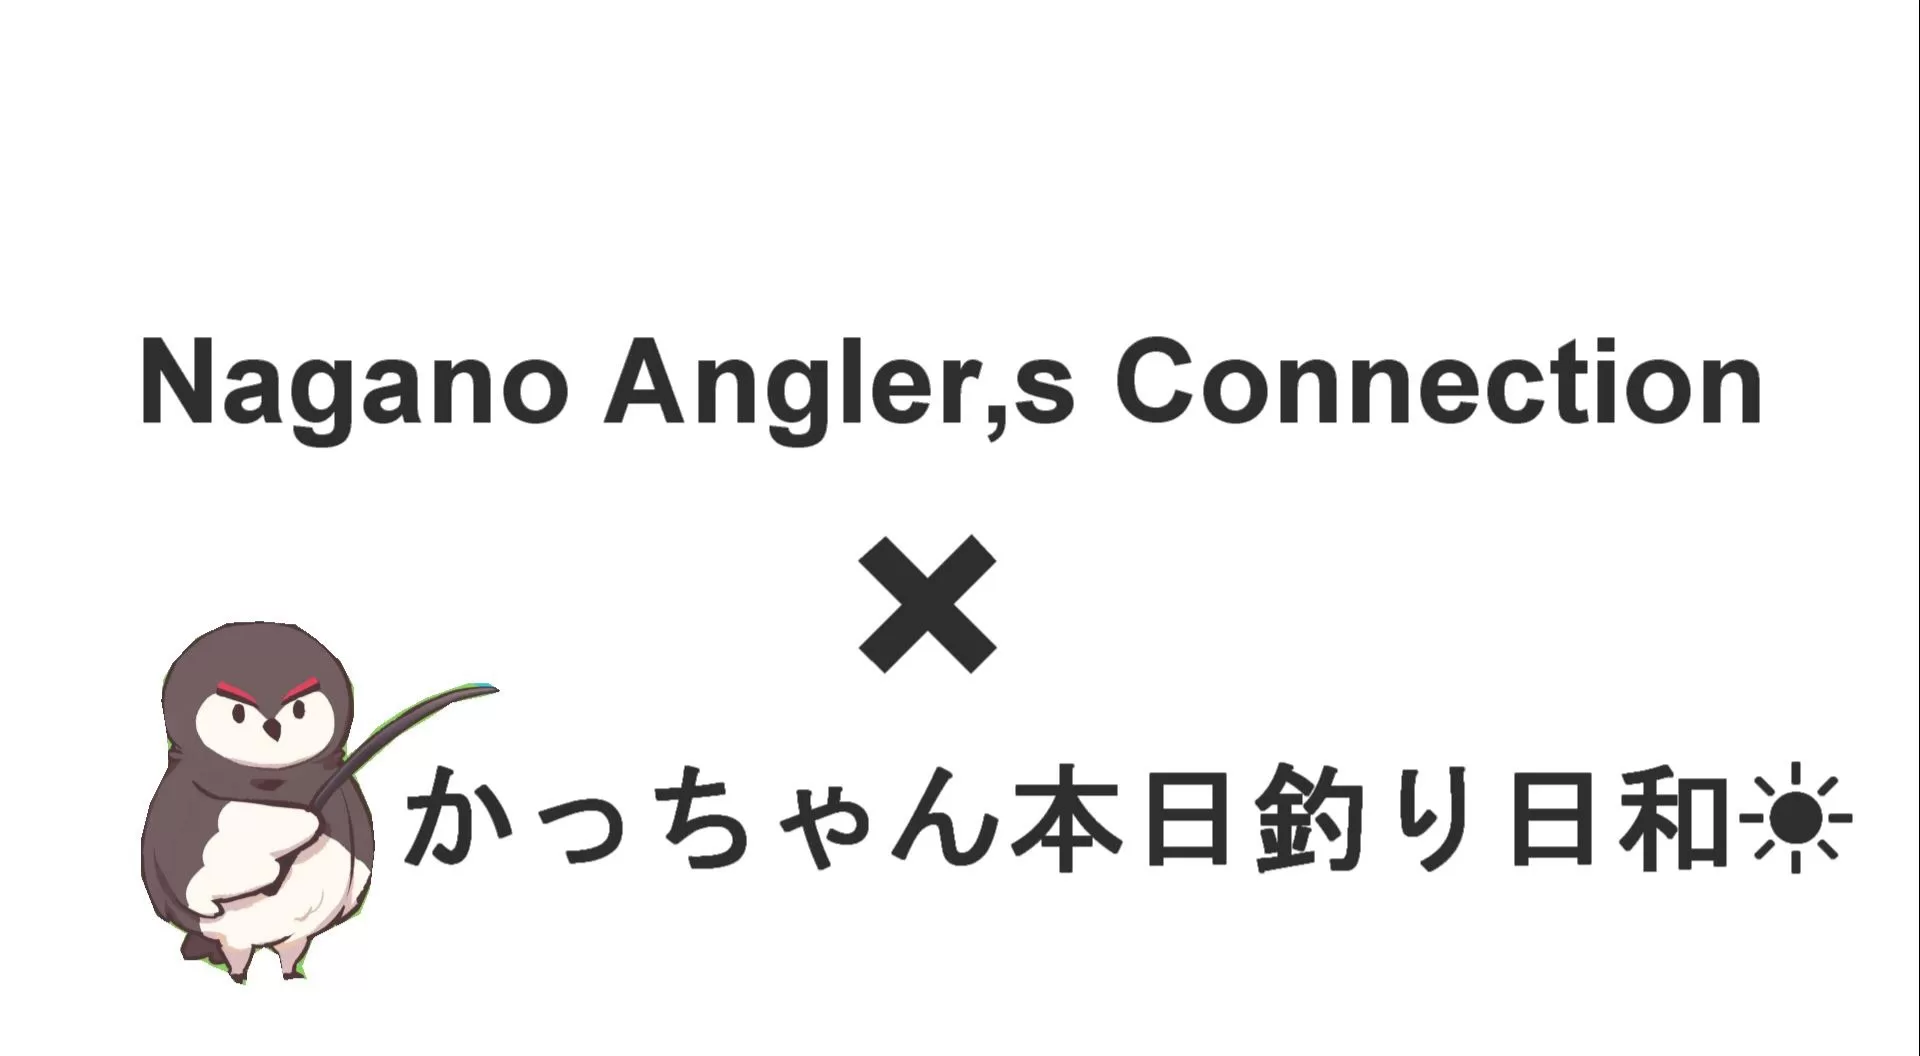 Nagano 　Angler,s　Connection